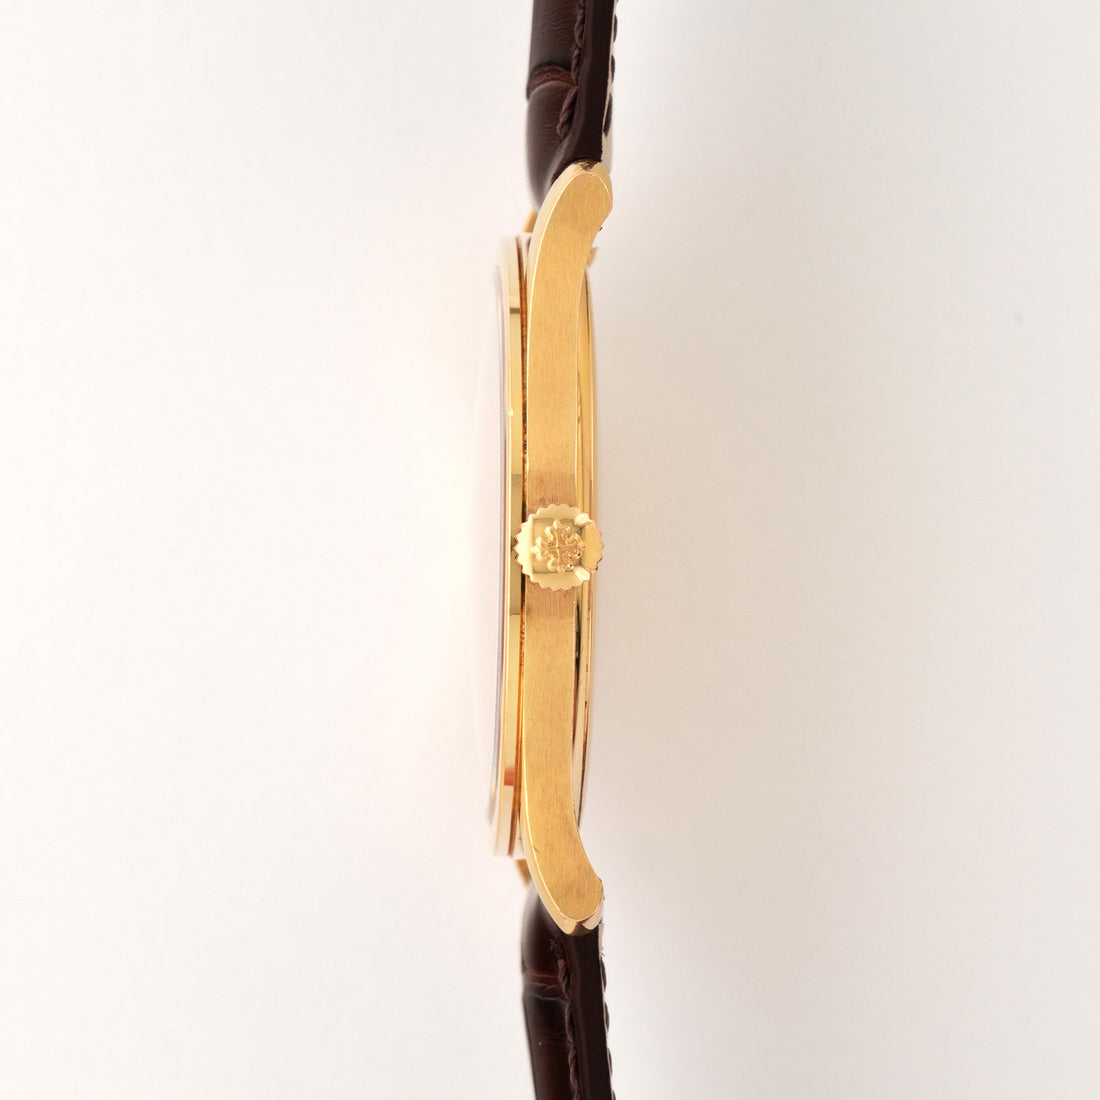 Patek Philippe Rose Gold Calatrava Watch Ref. 5196